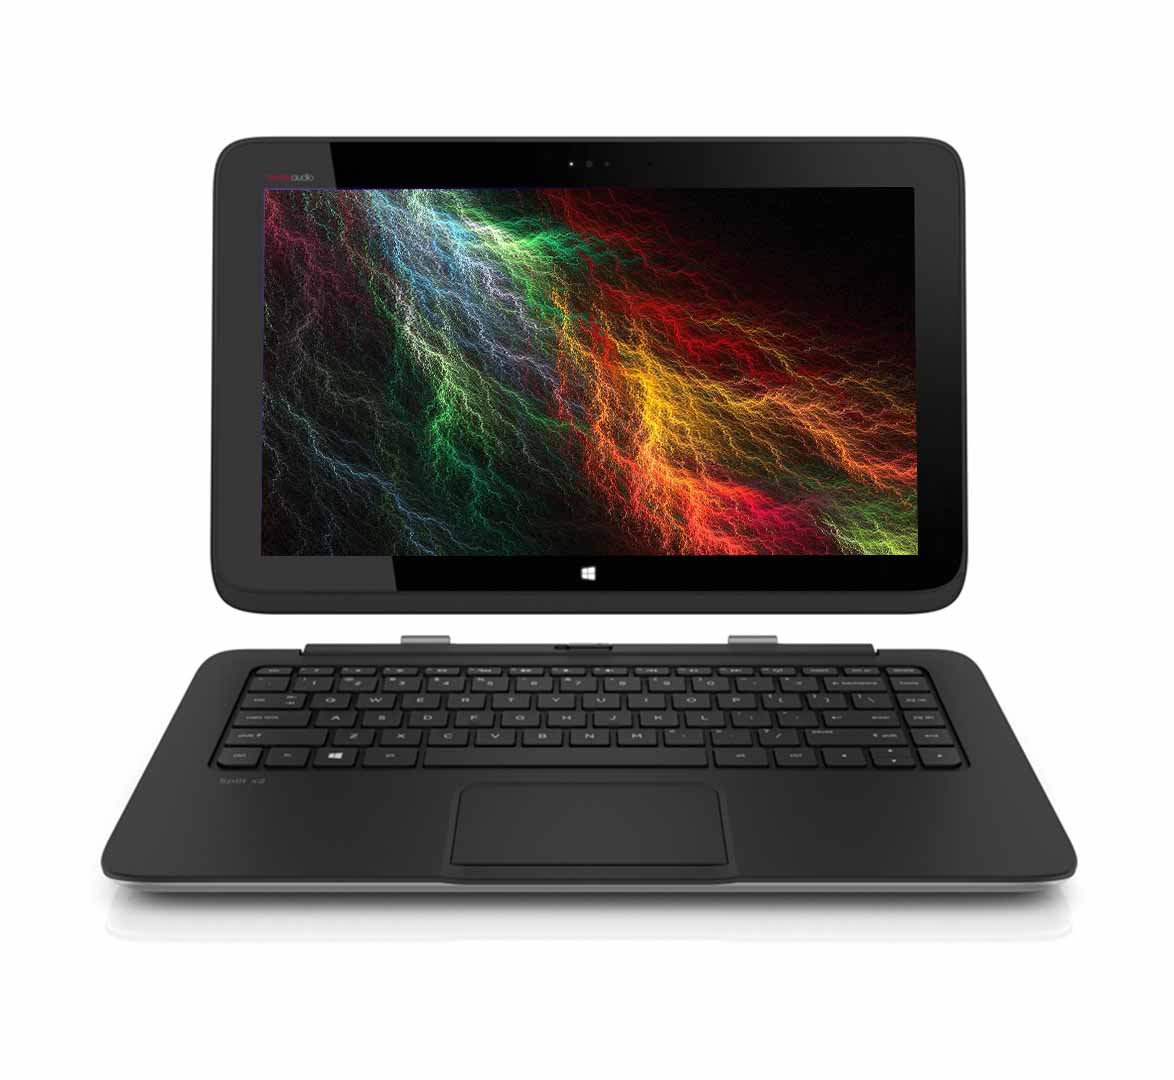 HP Split 13 x2 Business Laptop, Intel Core i3-4th Gen CPU, 4GB RAM, 128GB SSD, 13.3 inch Touchscreen, Windows 10 Pro, Refurbished Laptop